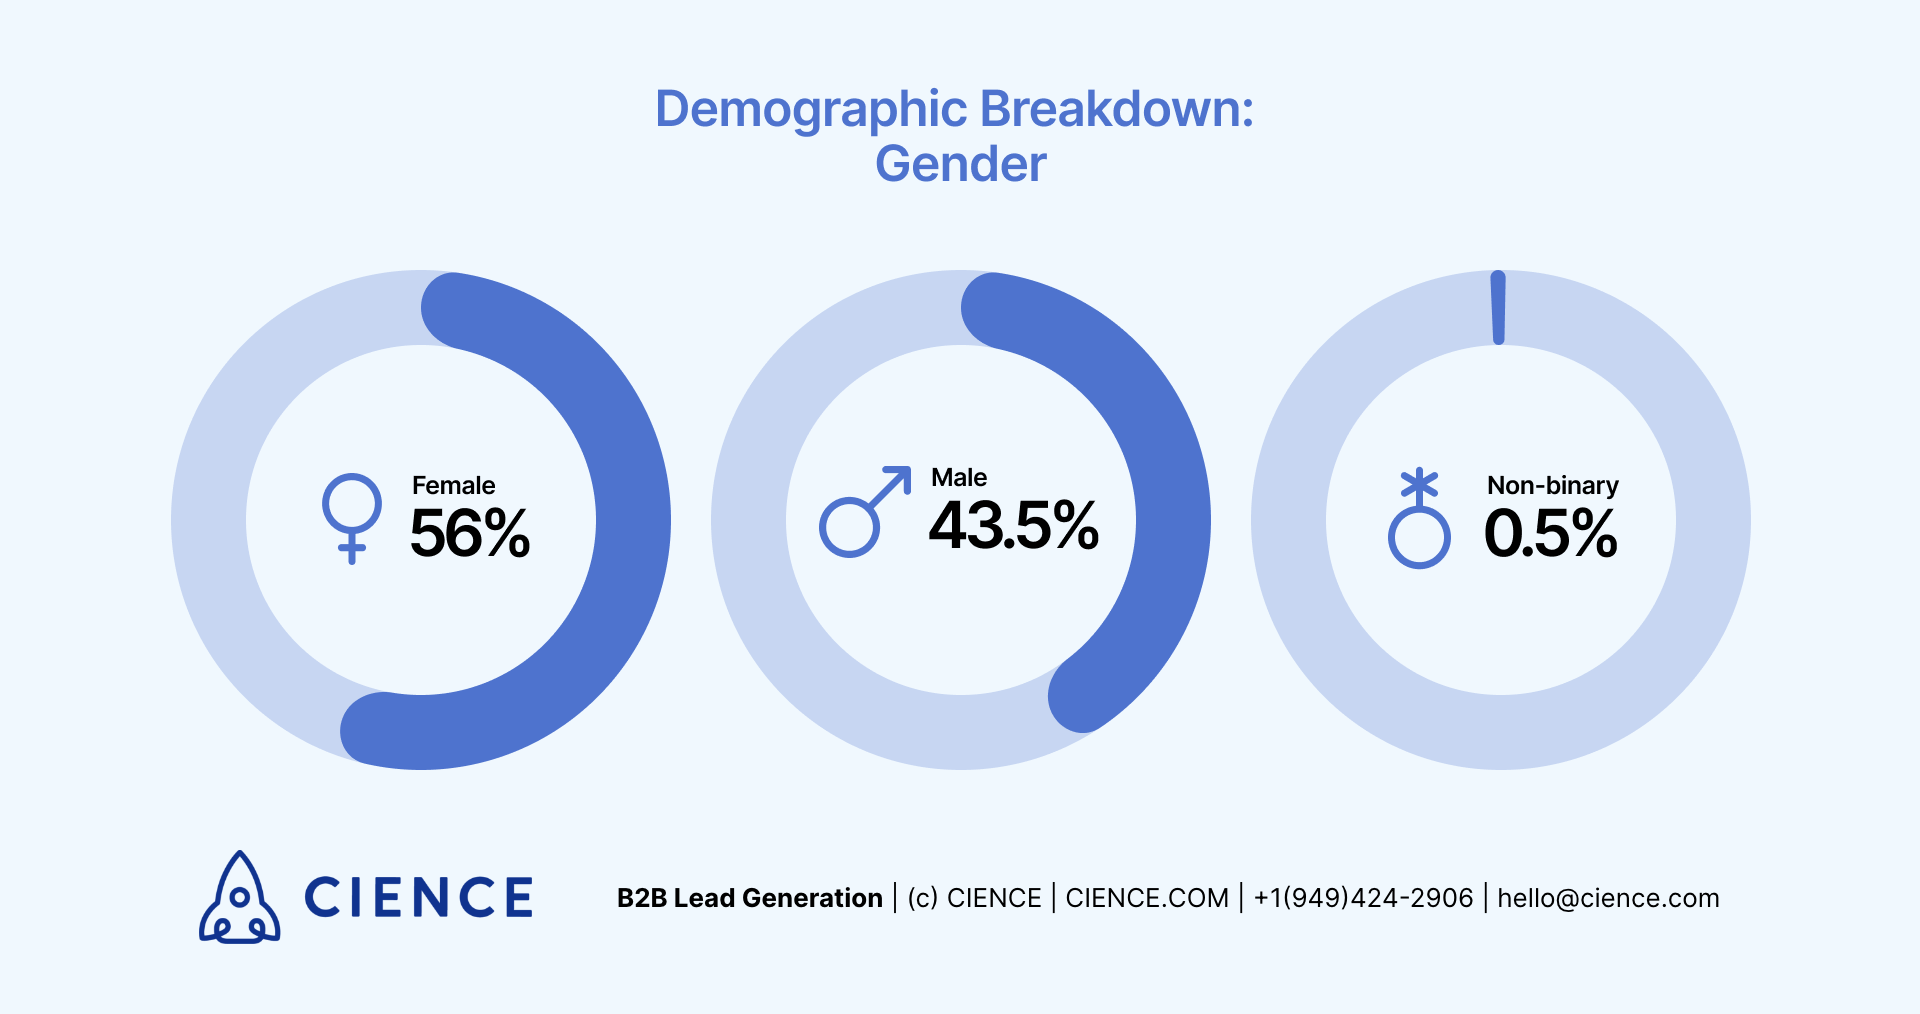 SDR Demographic Breakdown by Gender